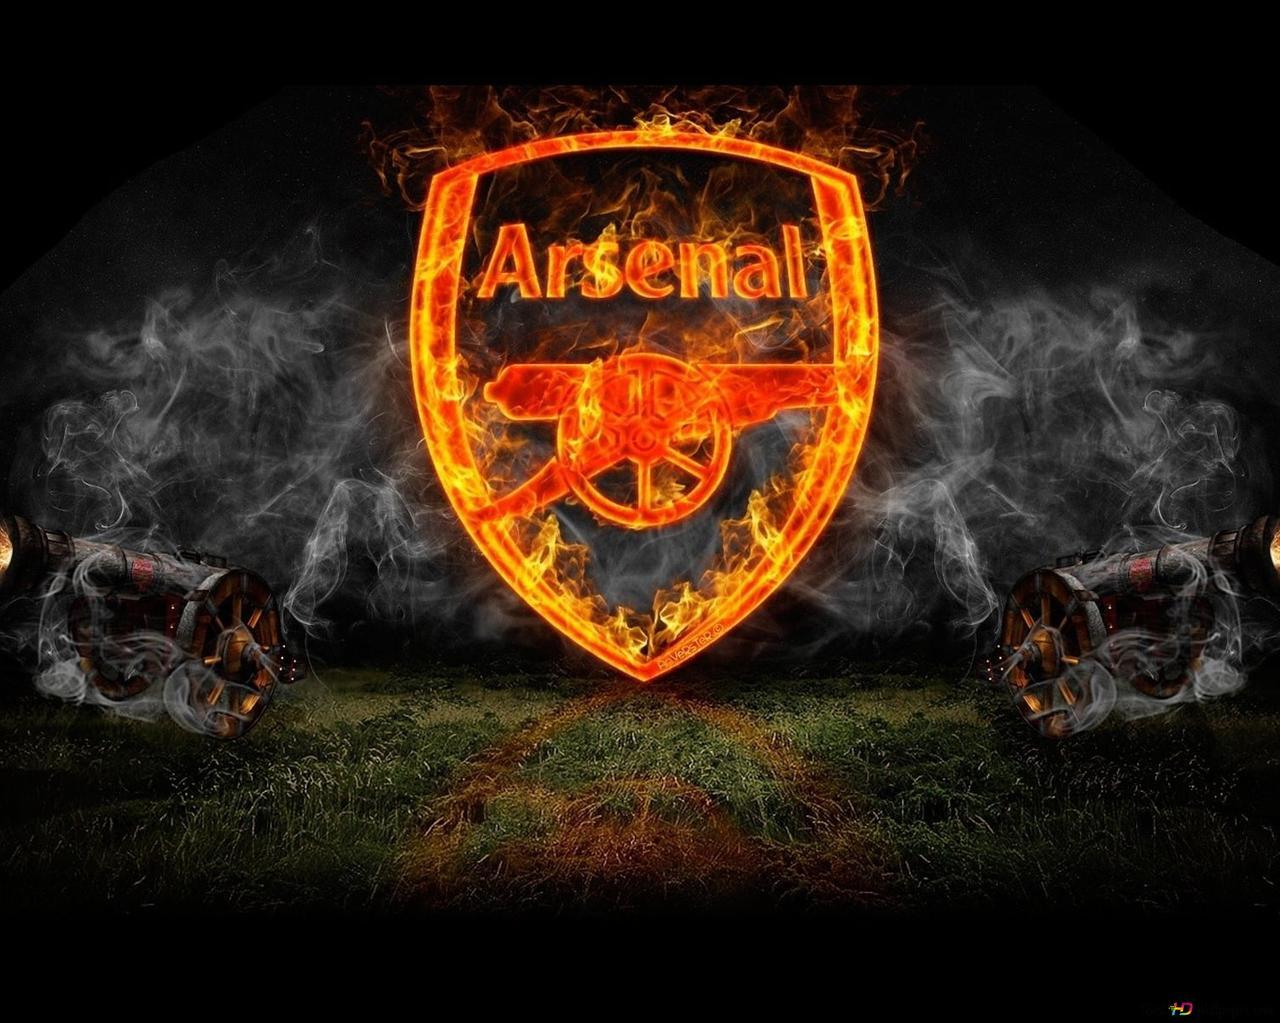 Arsenal Football Club Logo Dark On The Stadium Grass Among